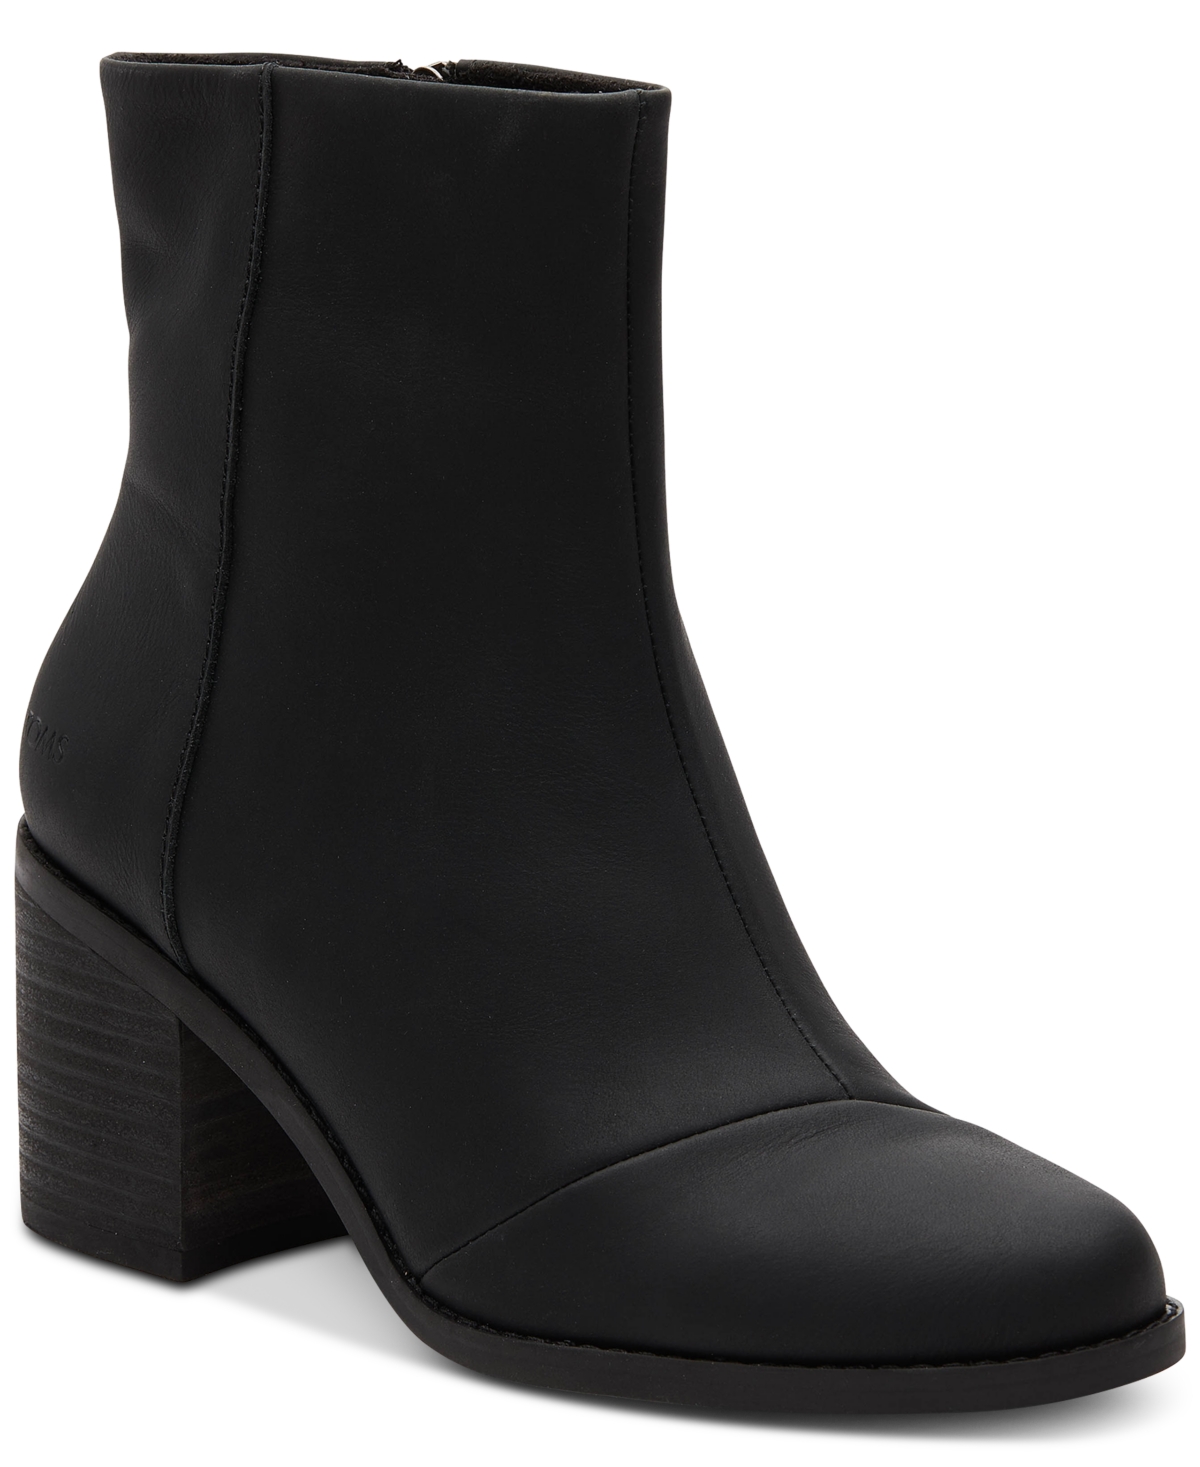 Women's Evelyn Stacked Block Heel Booties - Black/Black Leather